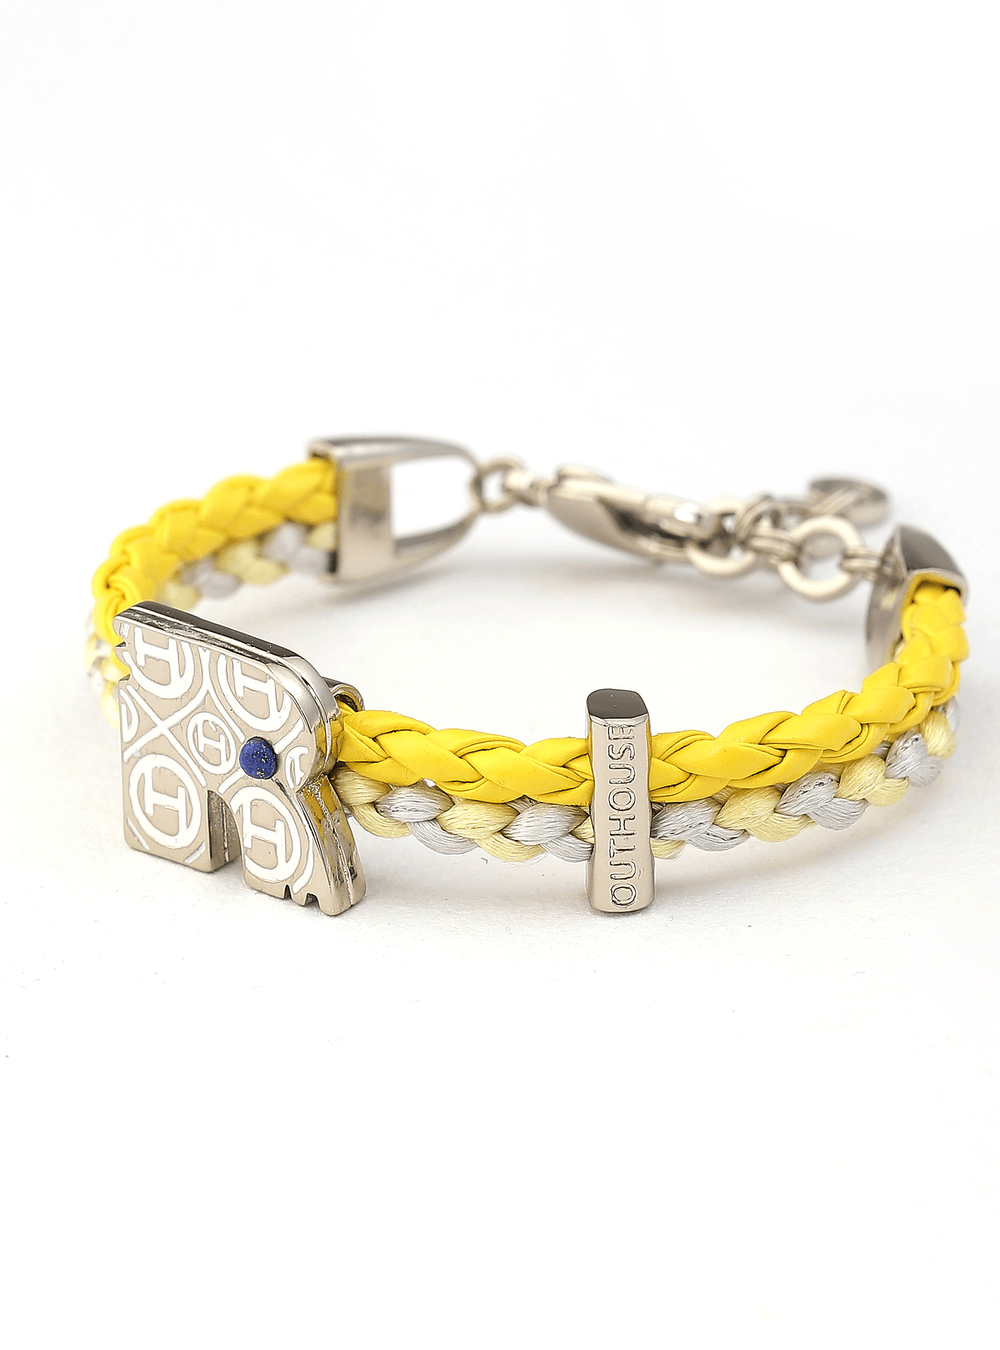 Solid Real 18K Yellow Gold Bracelet For Women Small Beads Full Star Link  7inchL | eBay